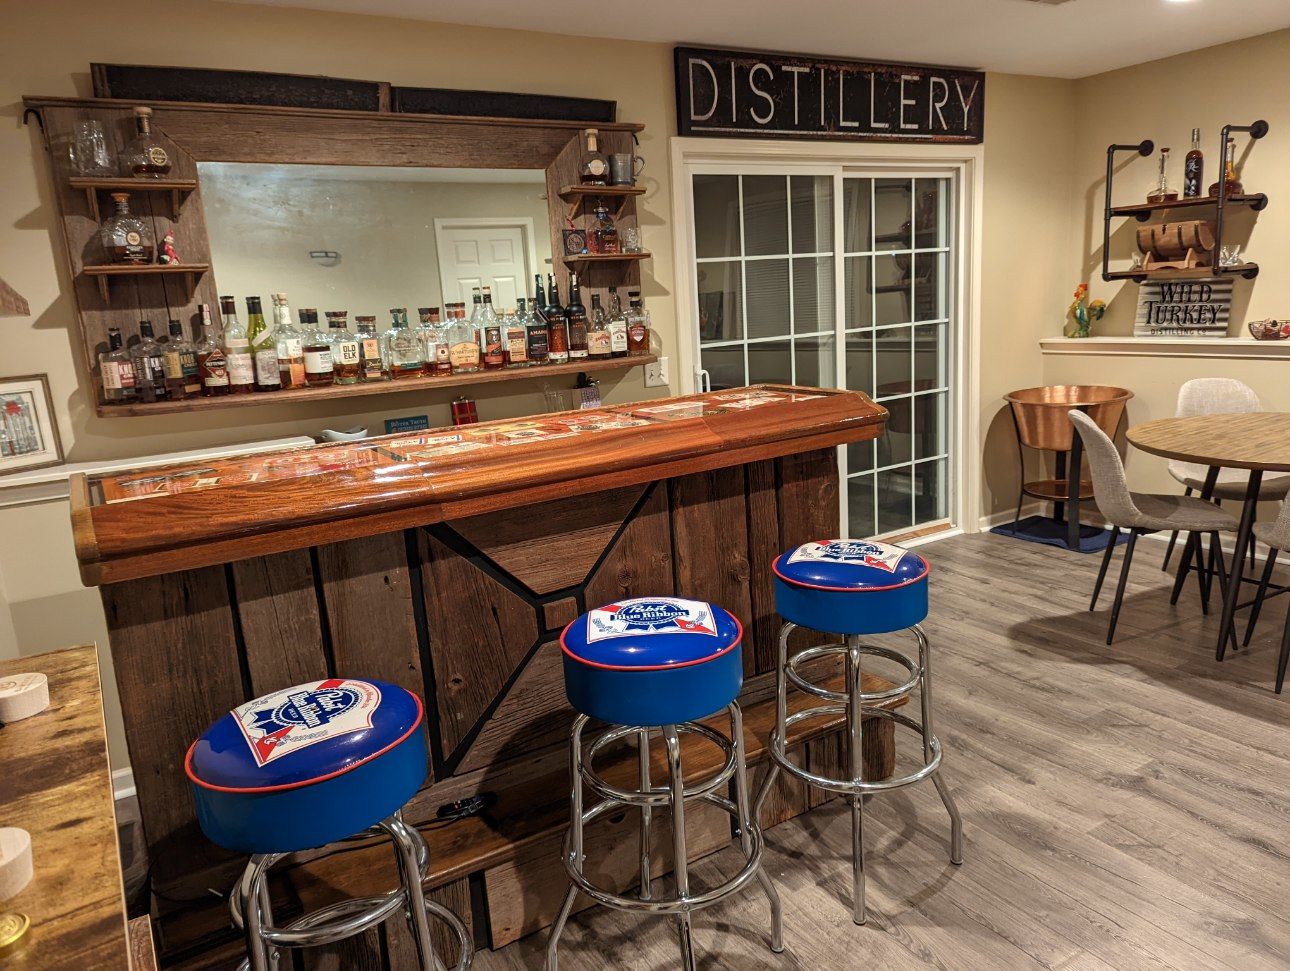 Prohibition Decor Garage Basement Bar Set of 6 Whiskey Bourbon Wall Art  Prints